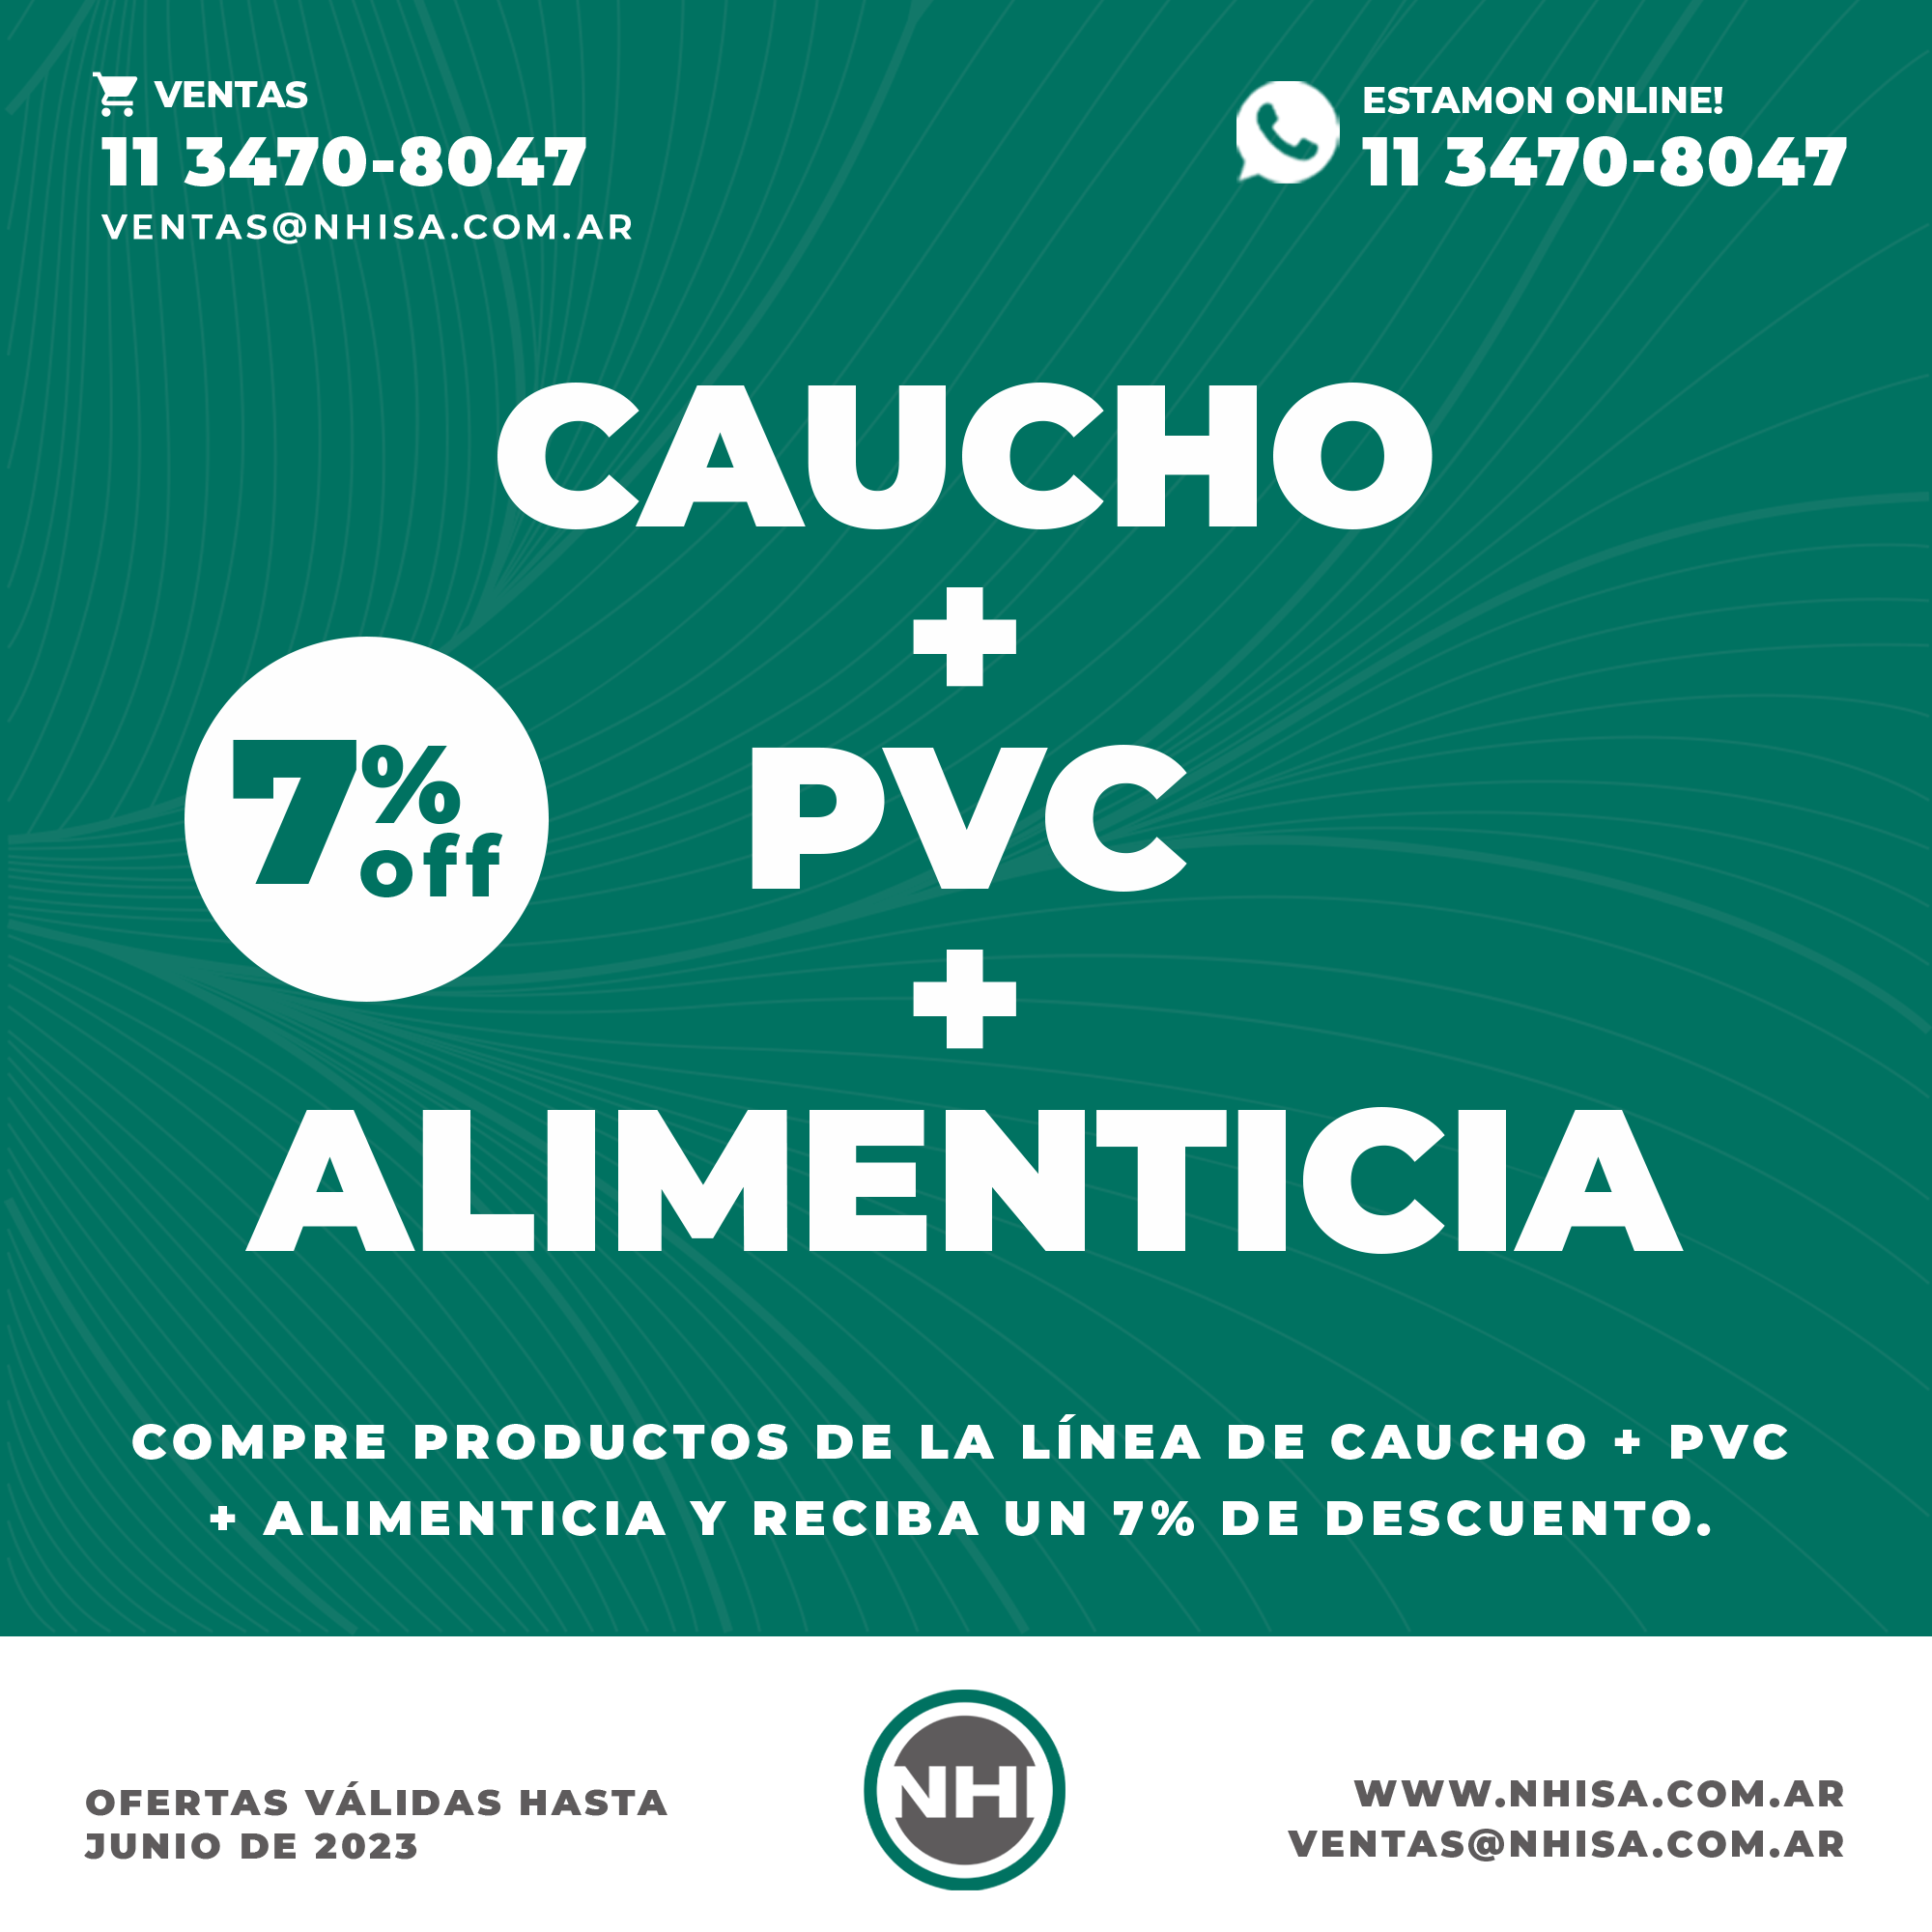 Caucho + PVC + Alimento